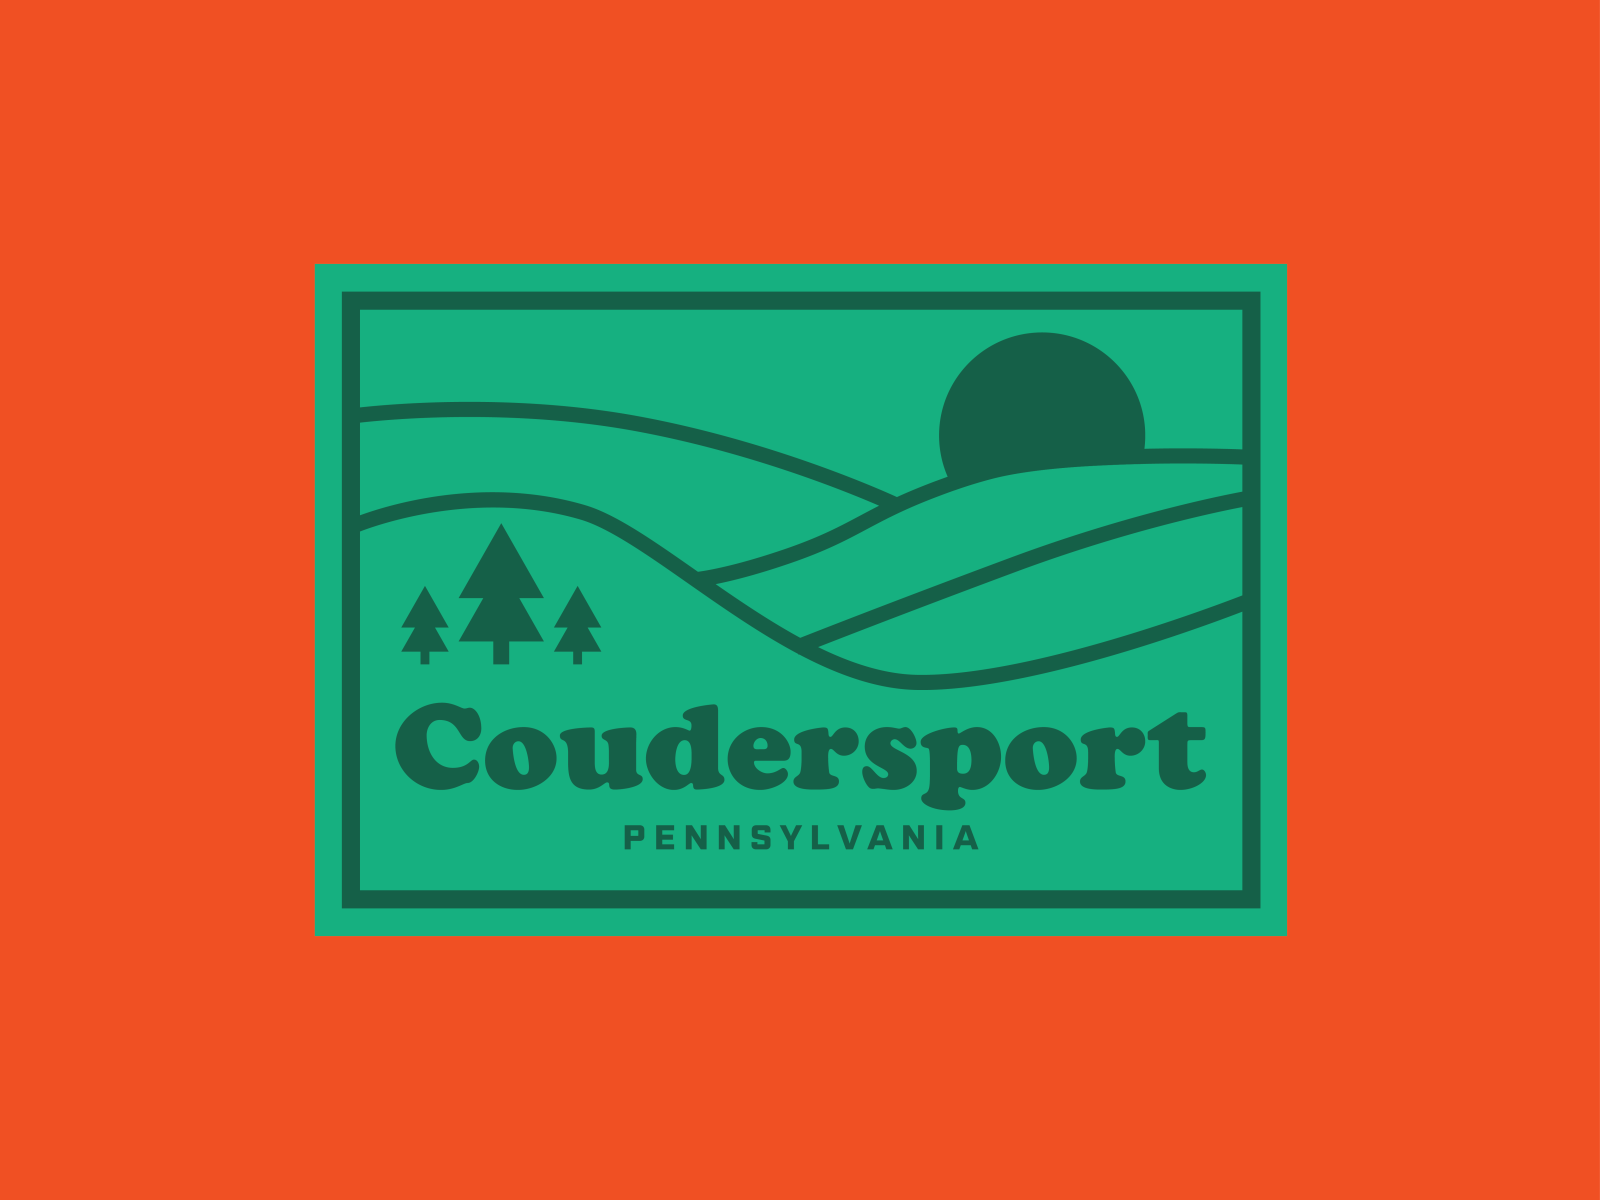 Coudersport PA Hometown by Danielle Podeszek on Dribbble